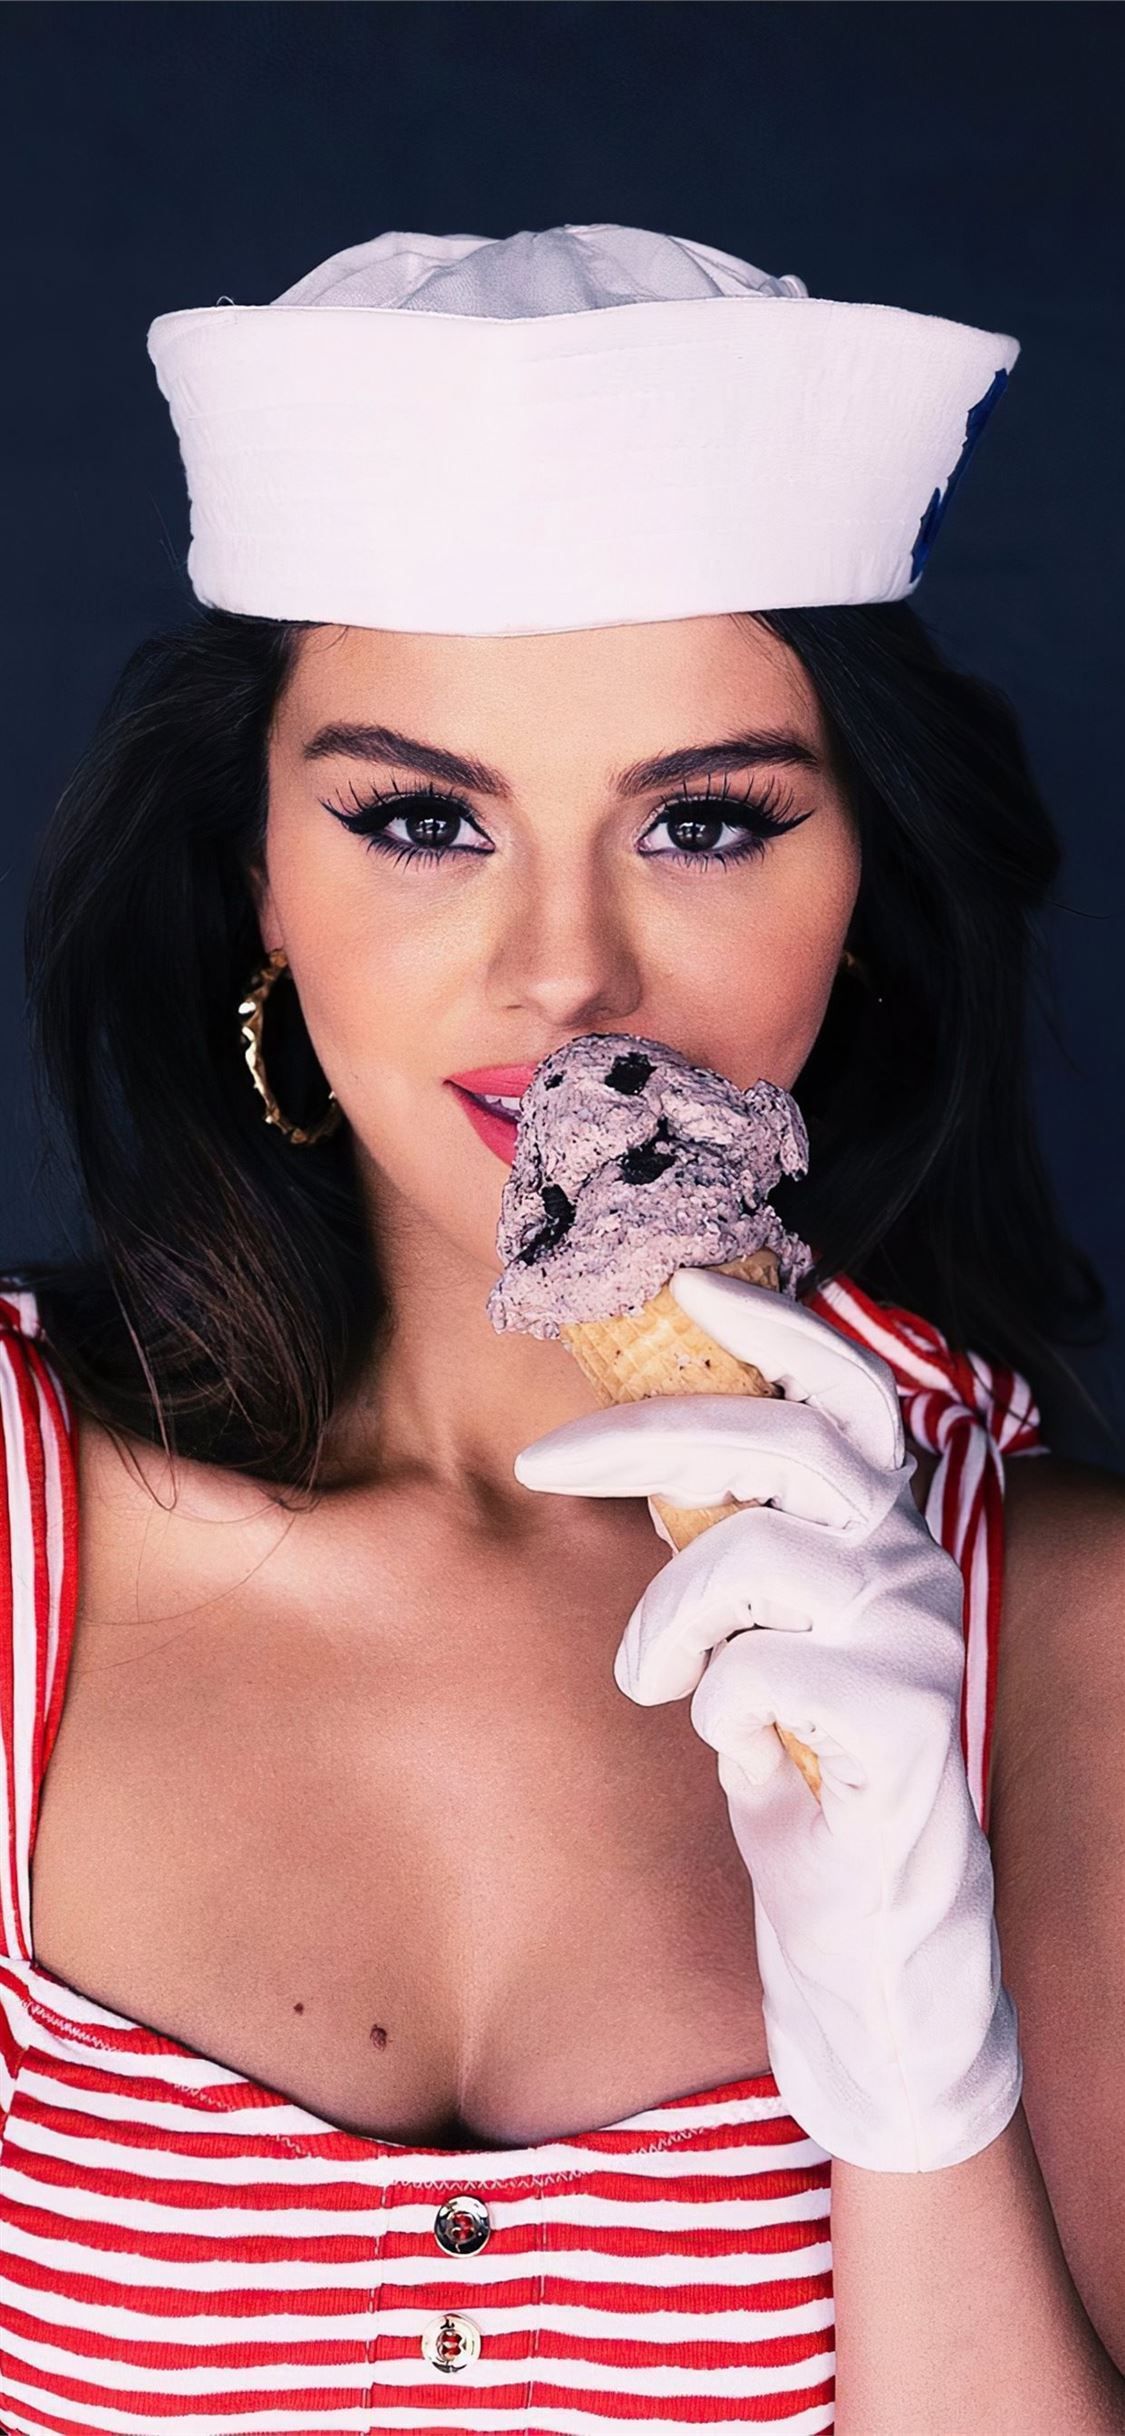 selena gomez ice cream #SelenaGomez #celebrities #girls k #music #iPhoneXWallpaper. Selena gomez photohoot, Selena gomez wallpaper, Selena gomez